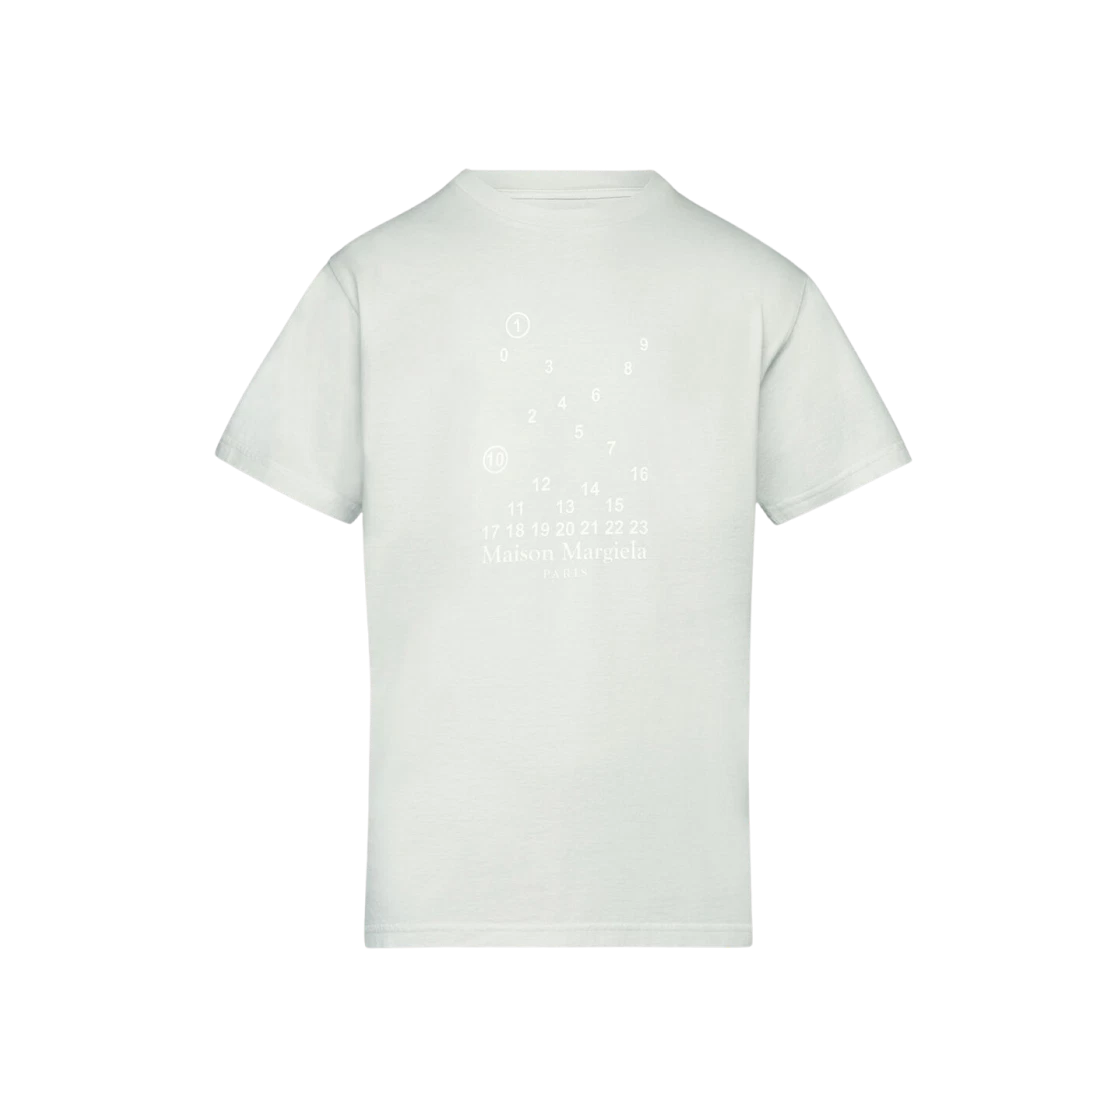 https://d2cva83hdk3bwc.cloudfront.net/w-maison-margiela-numeric-logo-t-shirt-off-white-1.jpg